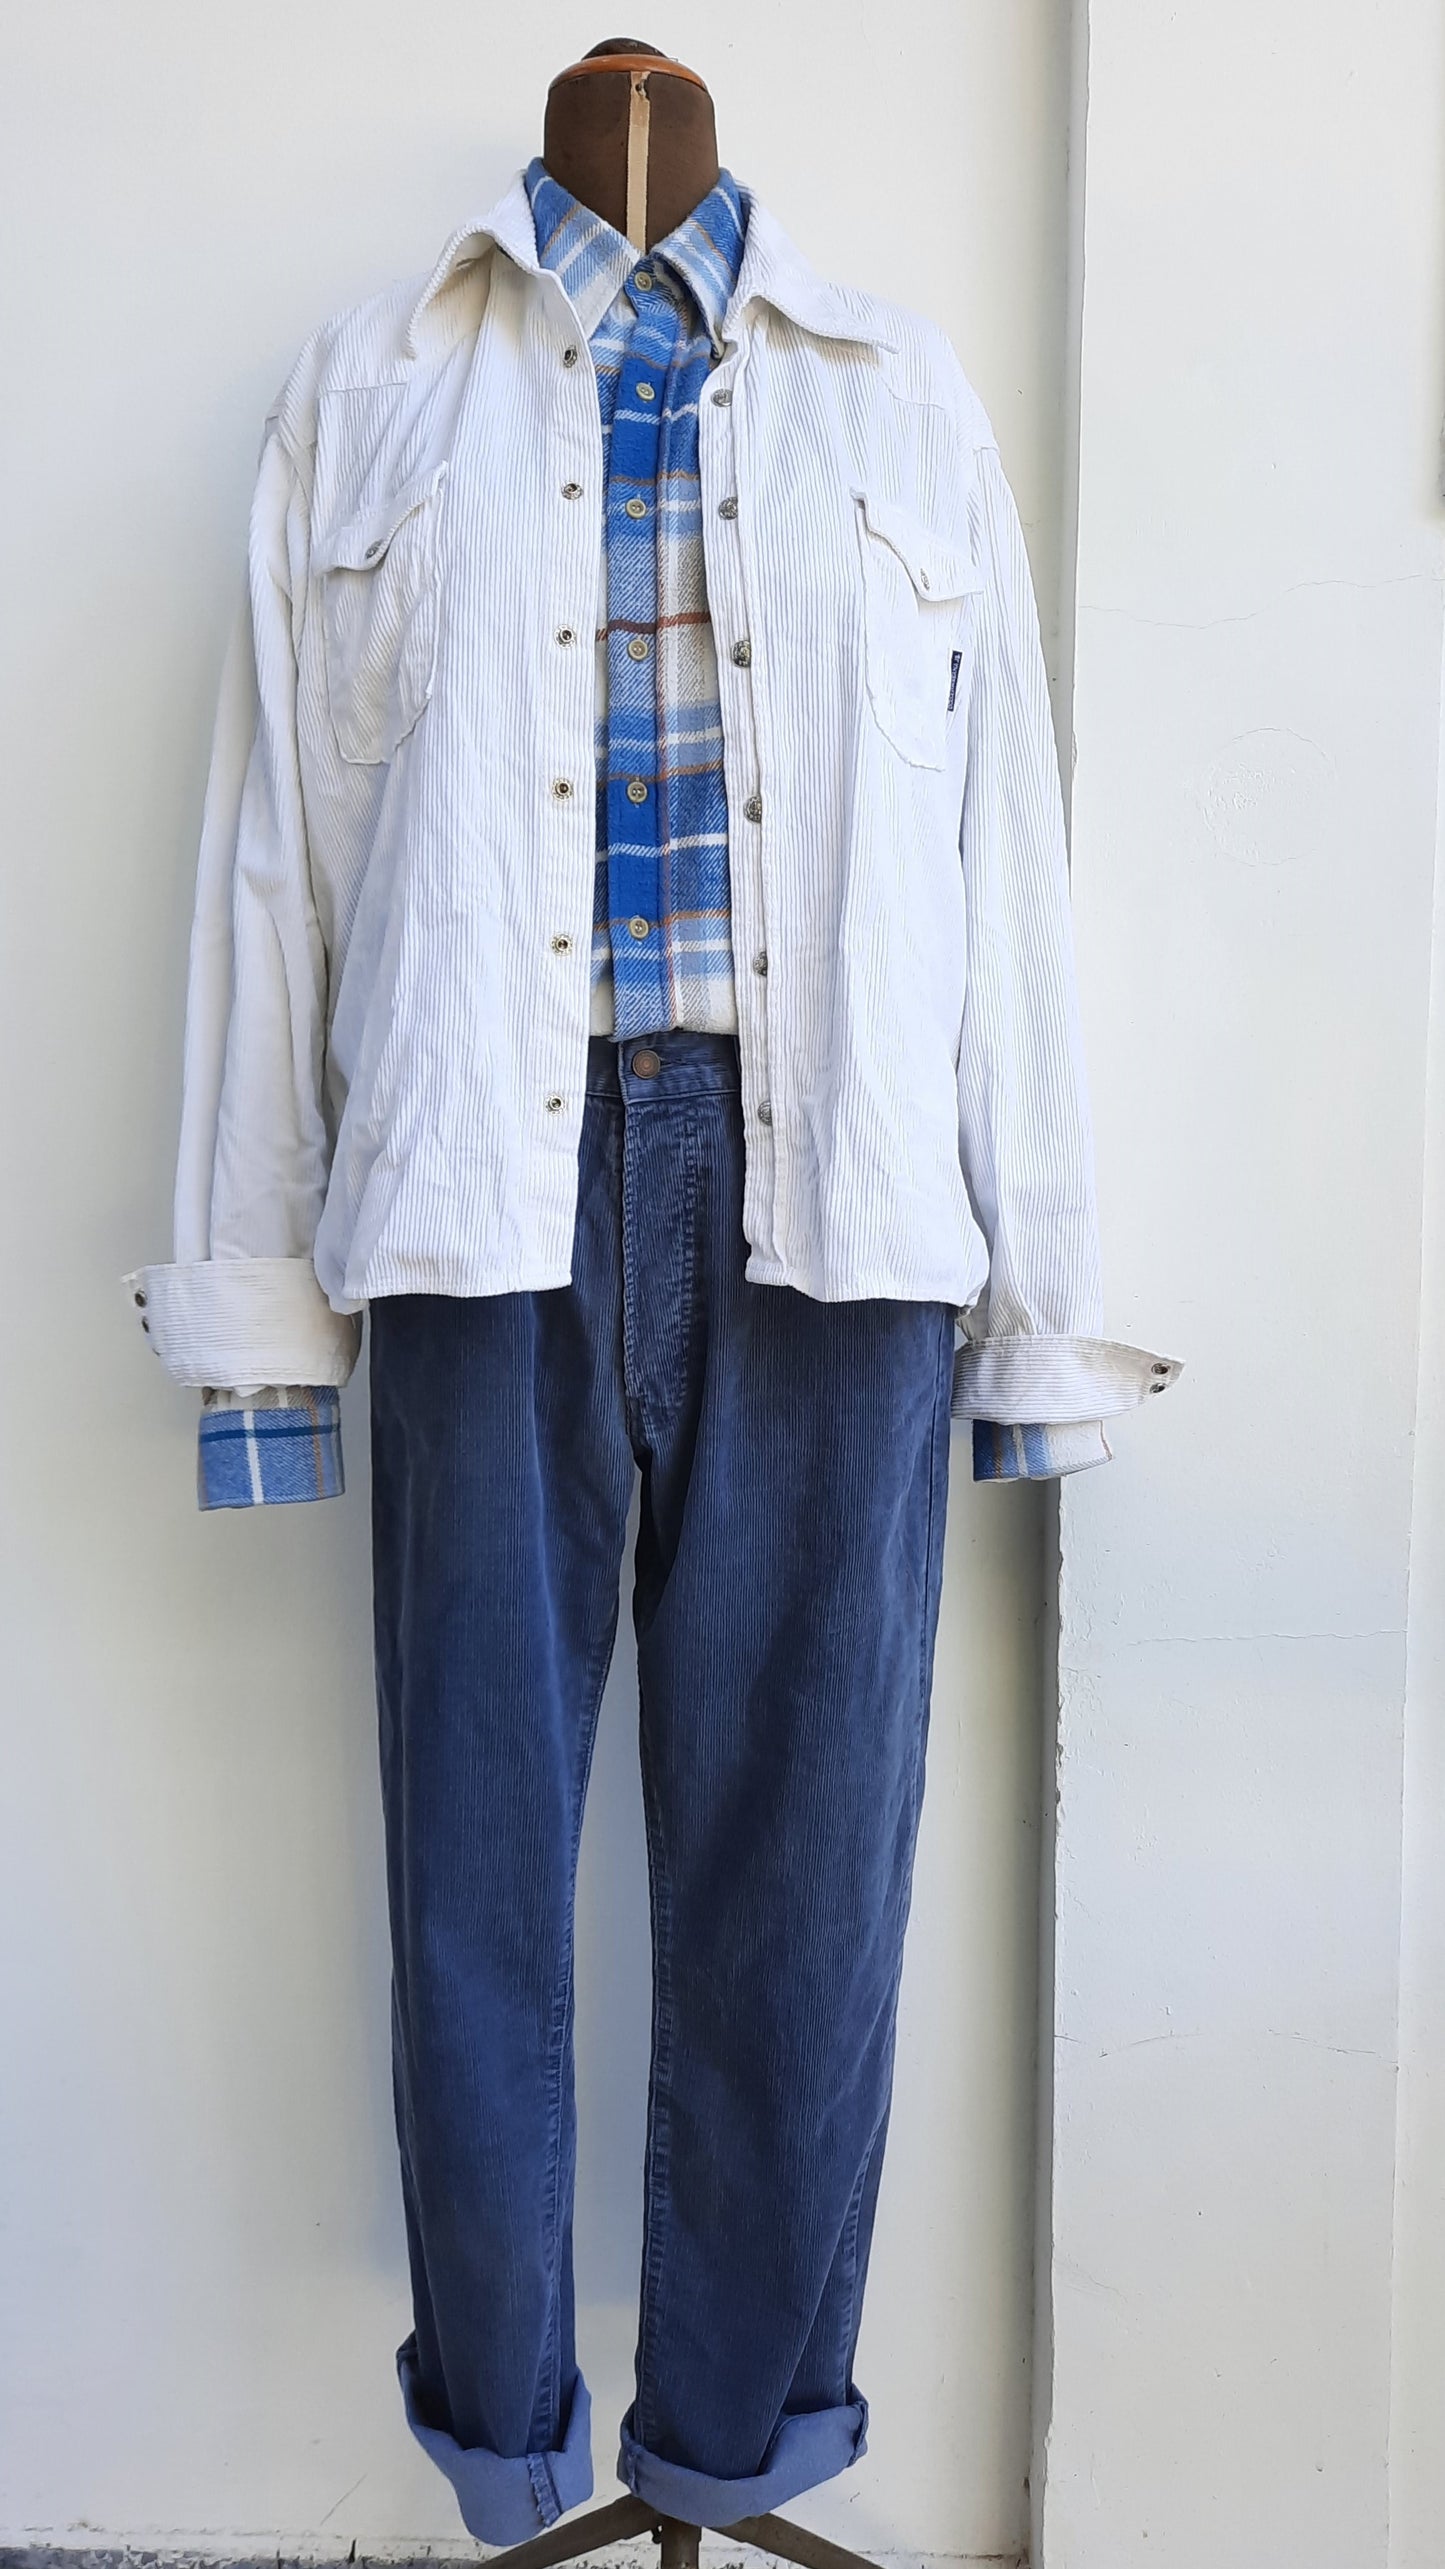 Vintage White Corduroy D&G Jeans Jacket